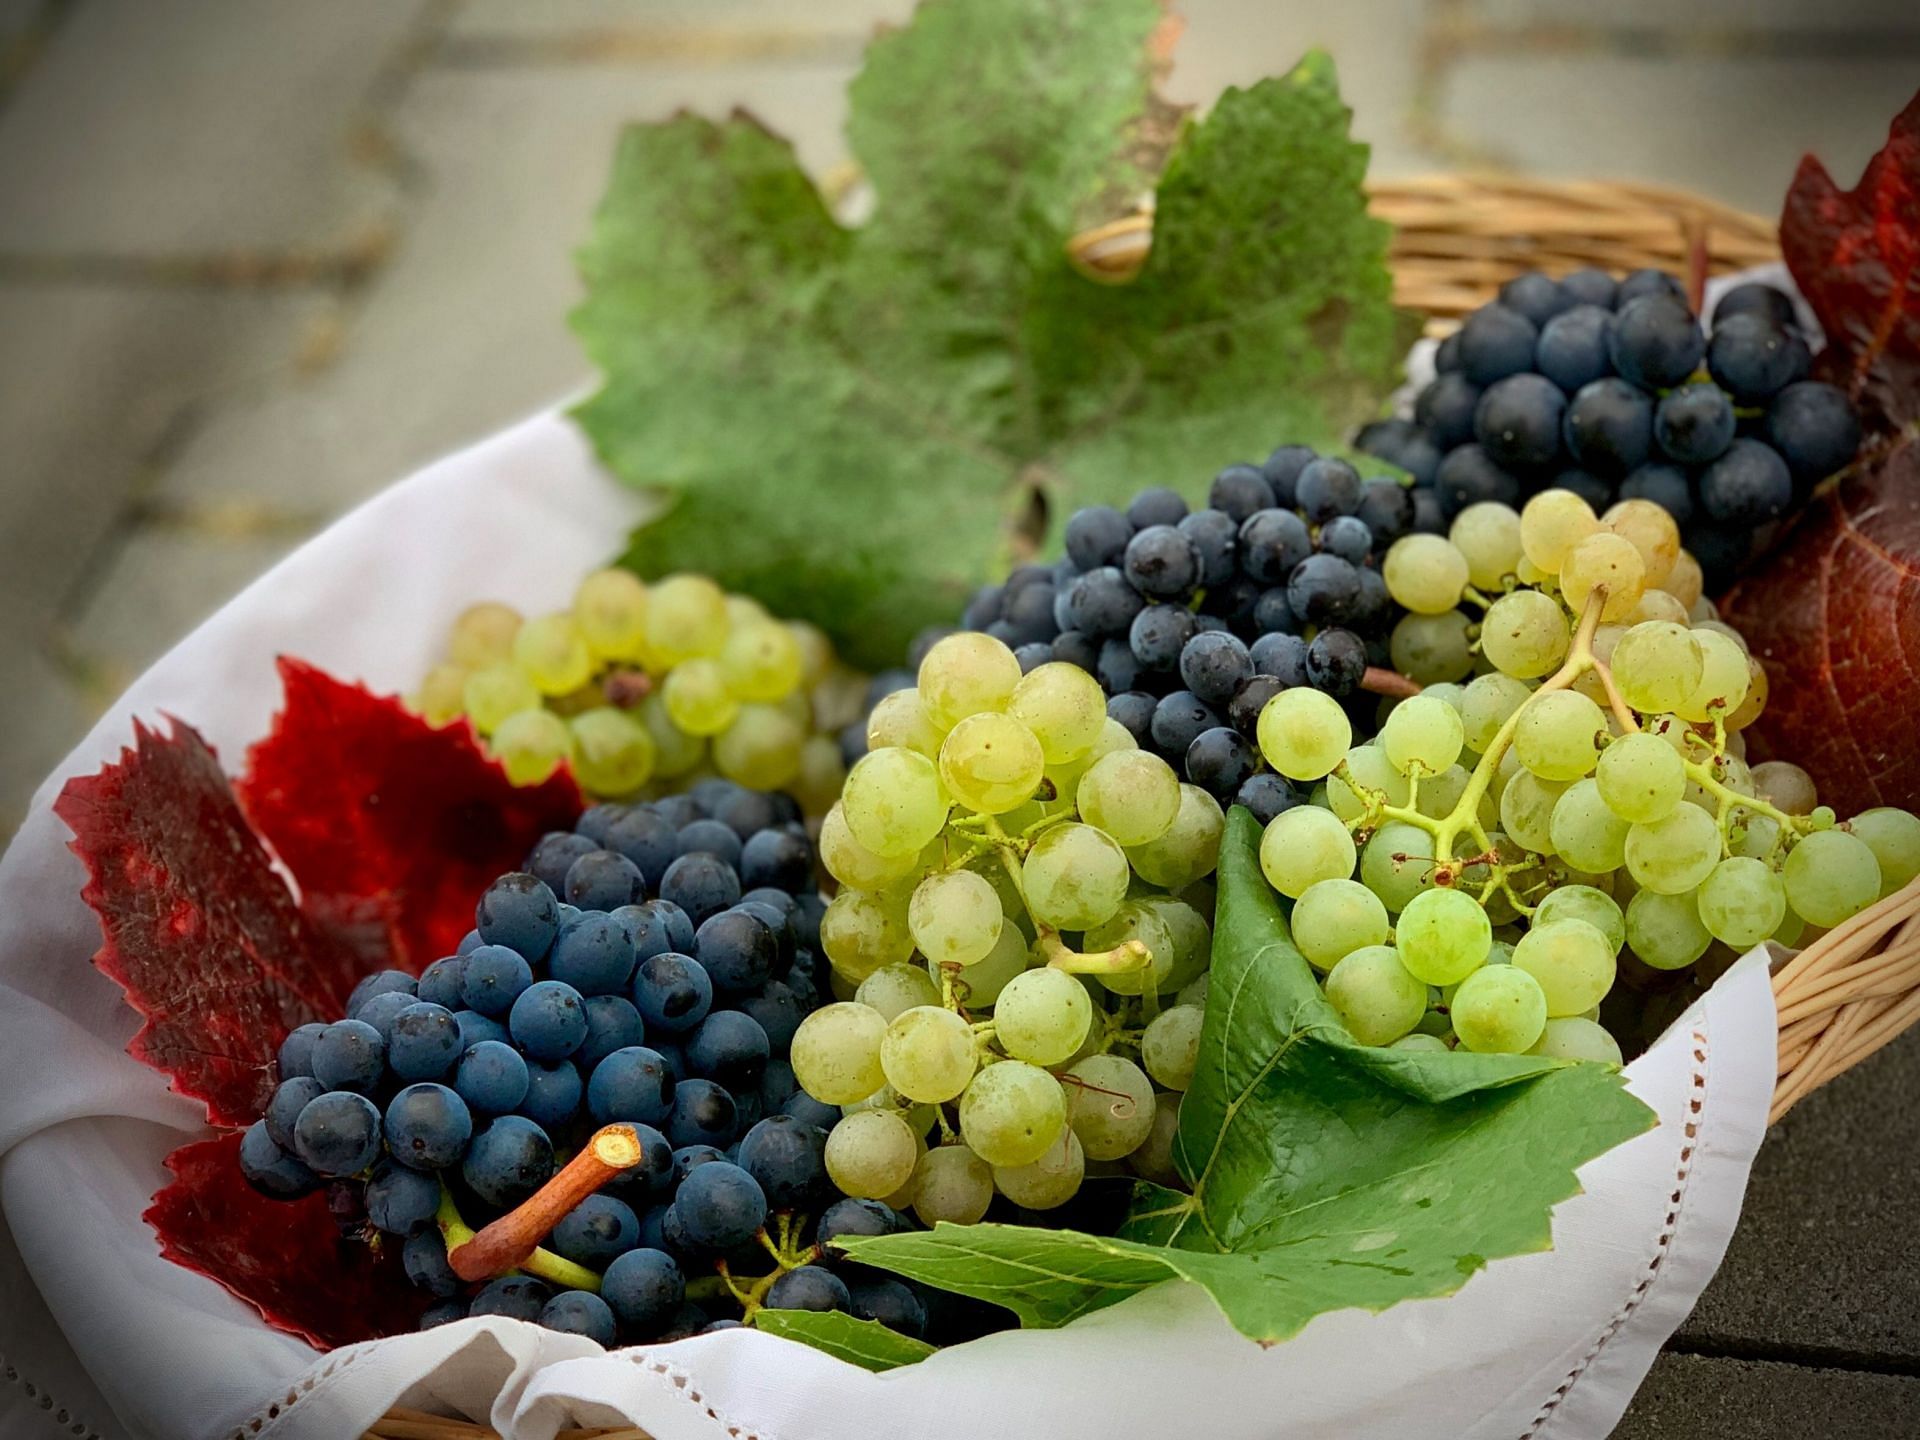 Green grapes and black grapes have the same health benefits. (Image via Unsplash/ Gunter Hoffman)